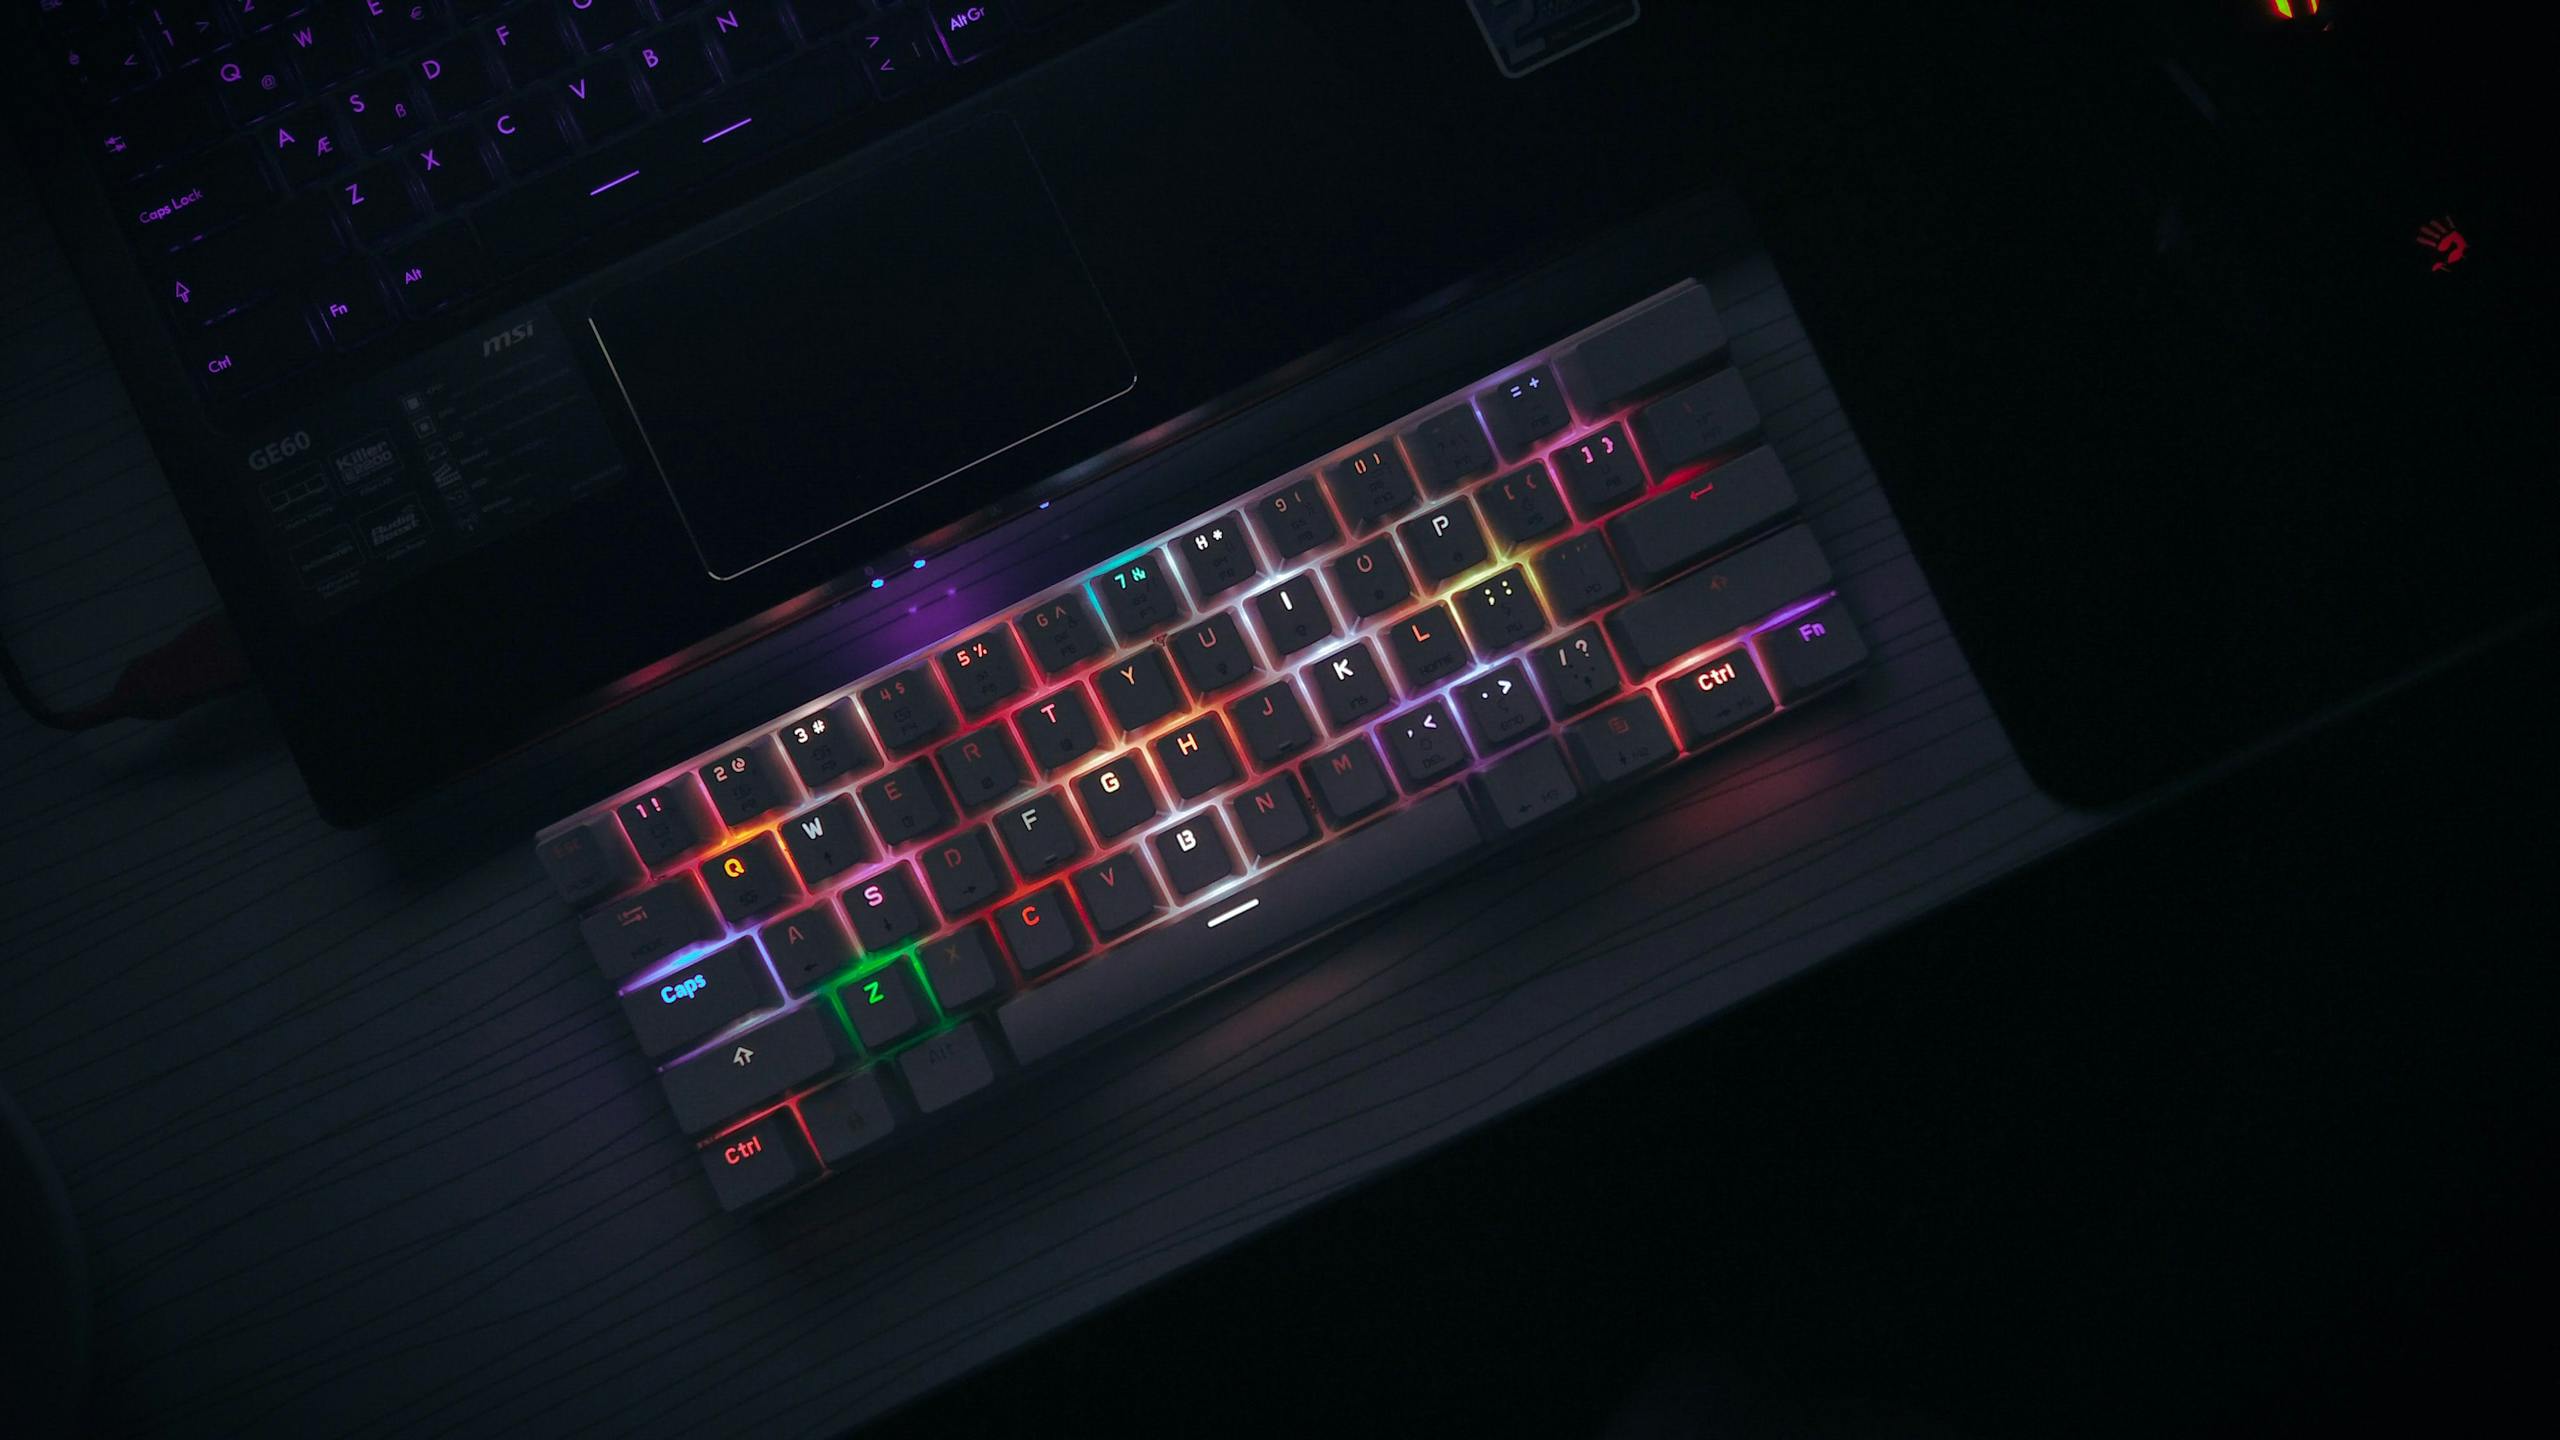 Keyboard with rainbow lighting